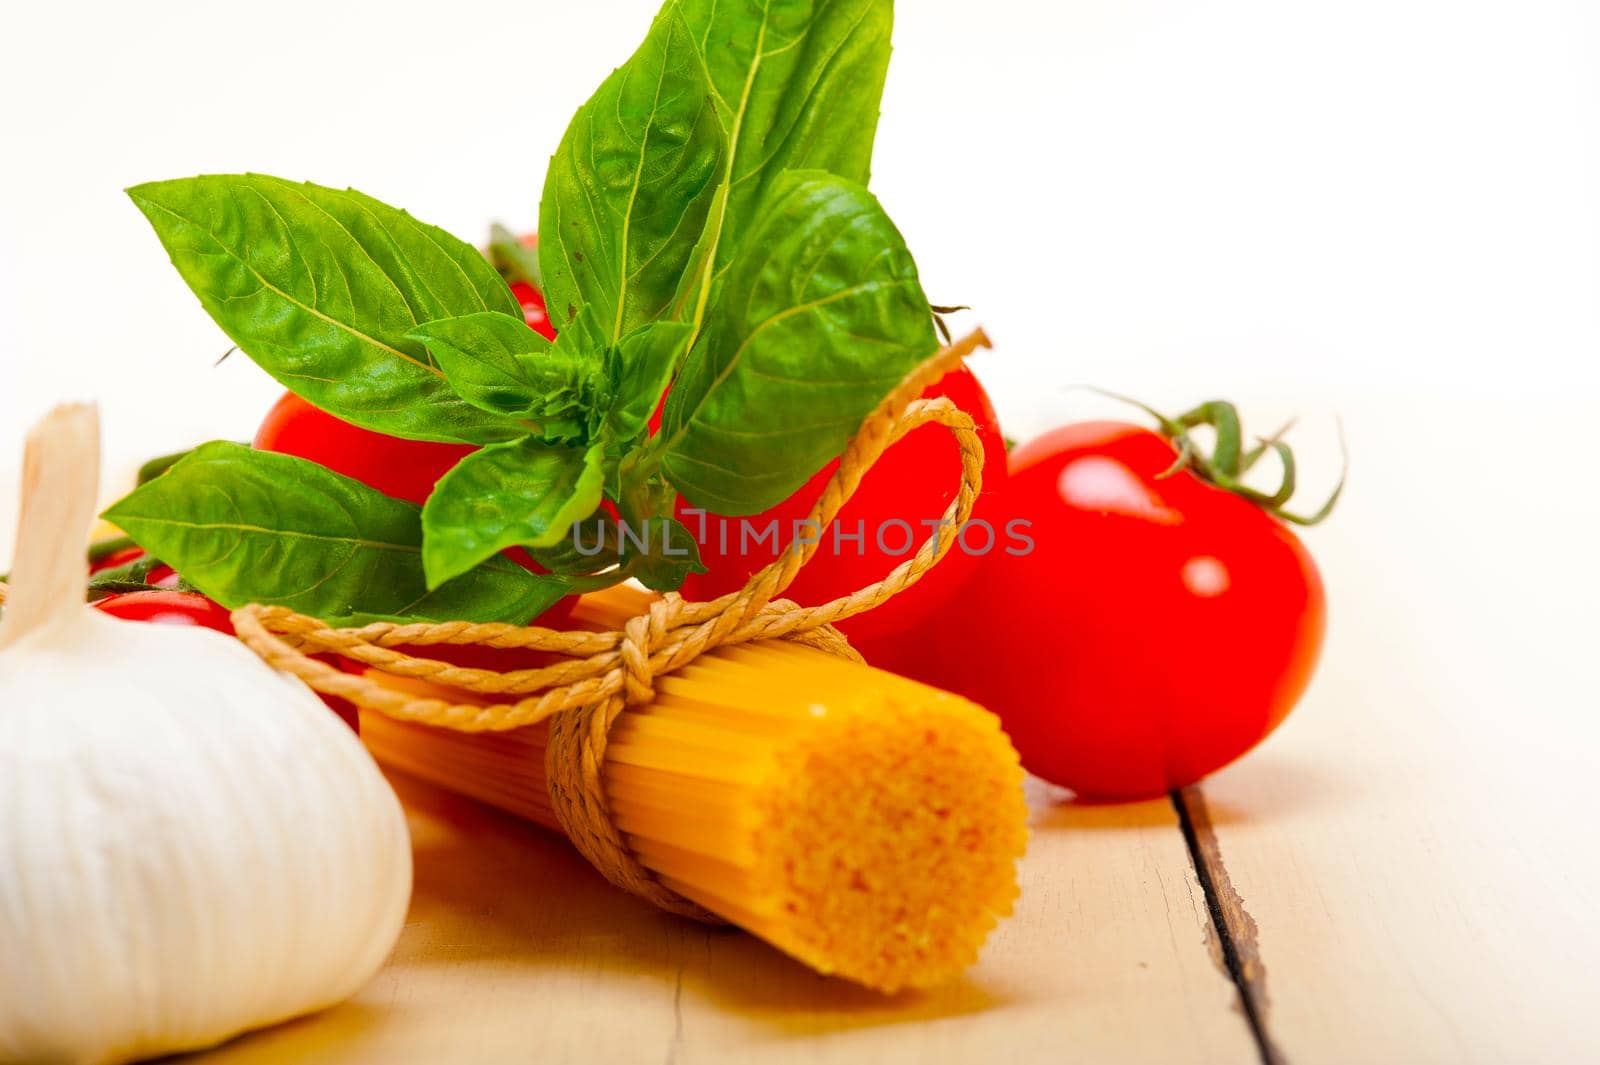 Italian basic pasta ingredients by keko64